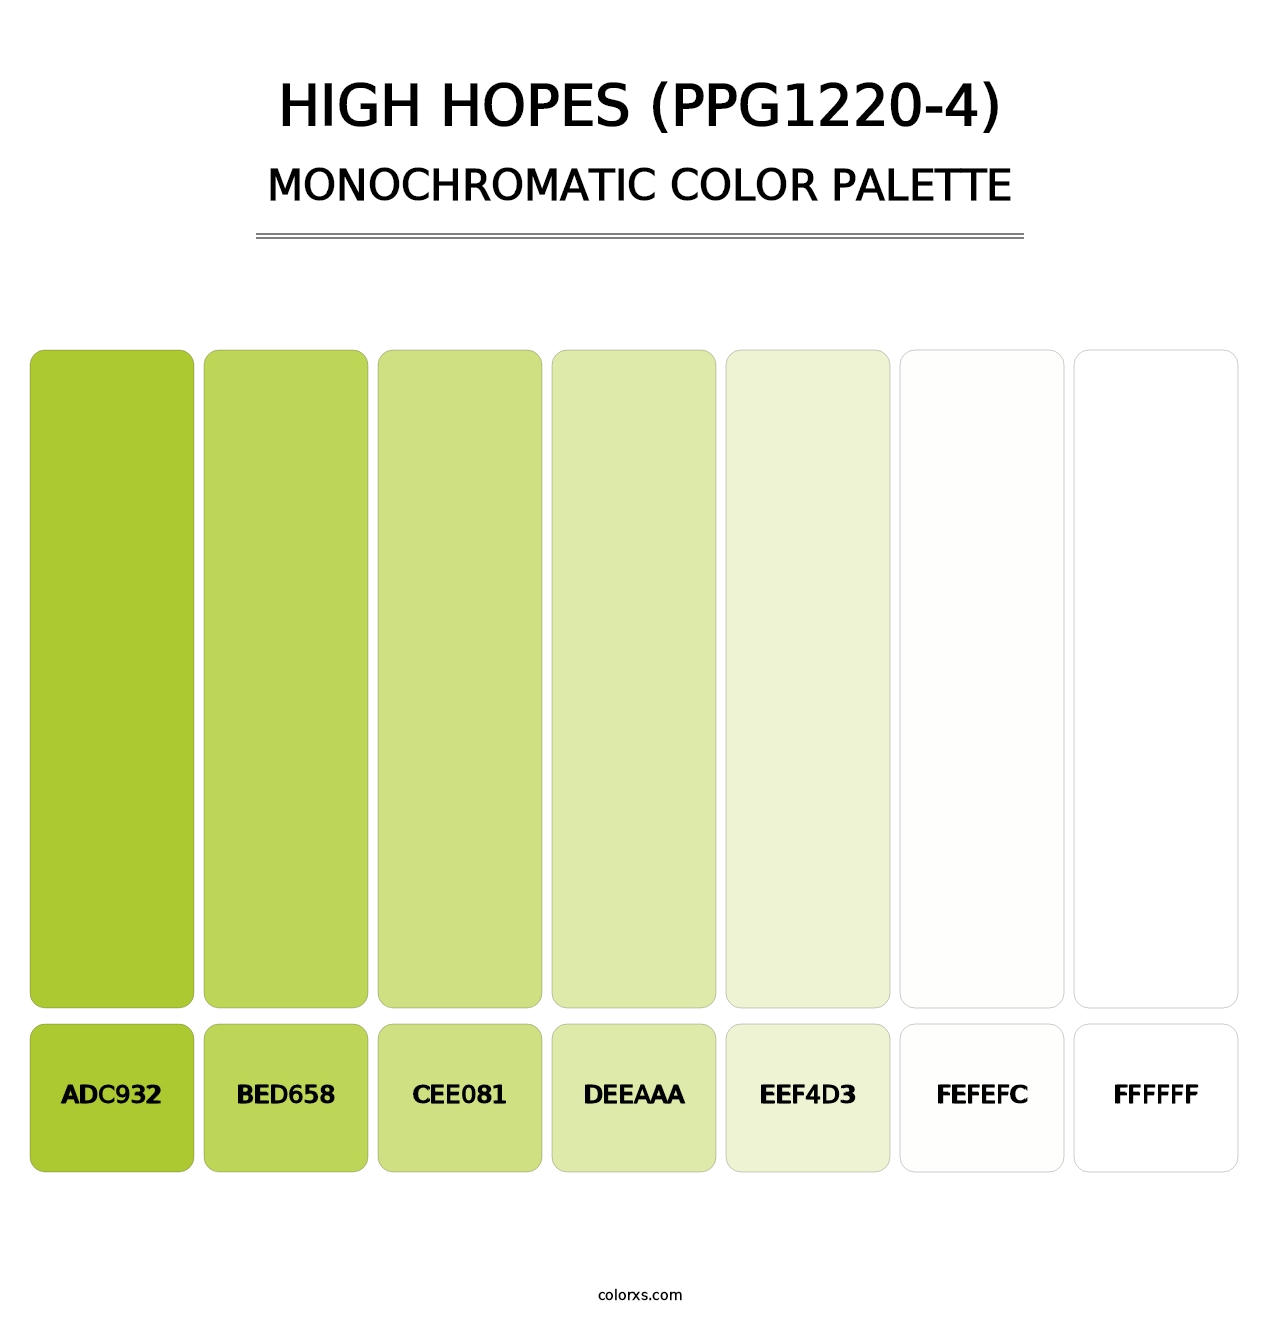 High Hopes (PPG1220-4) - Monochromatic Color Palette